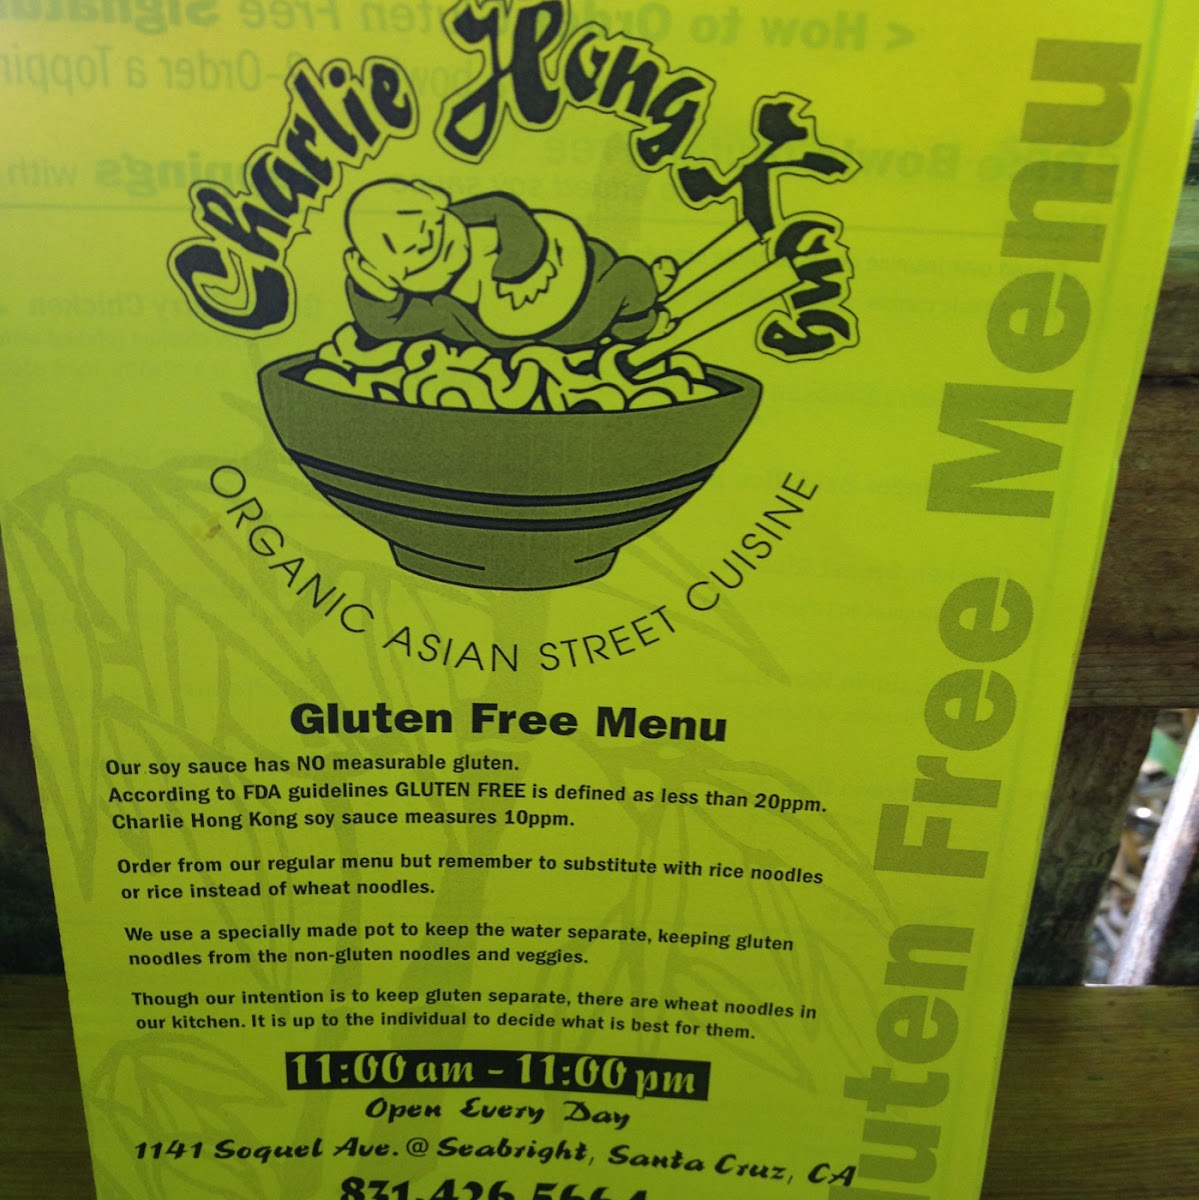 Charlie Hong Kong gluten-free menu